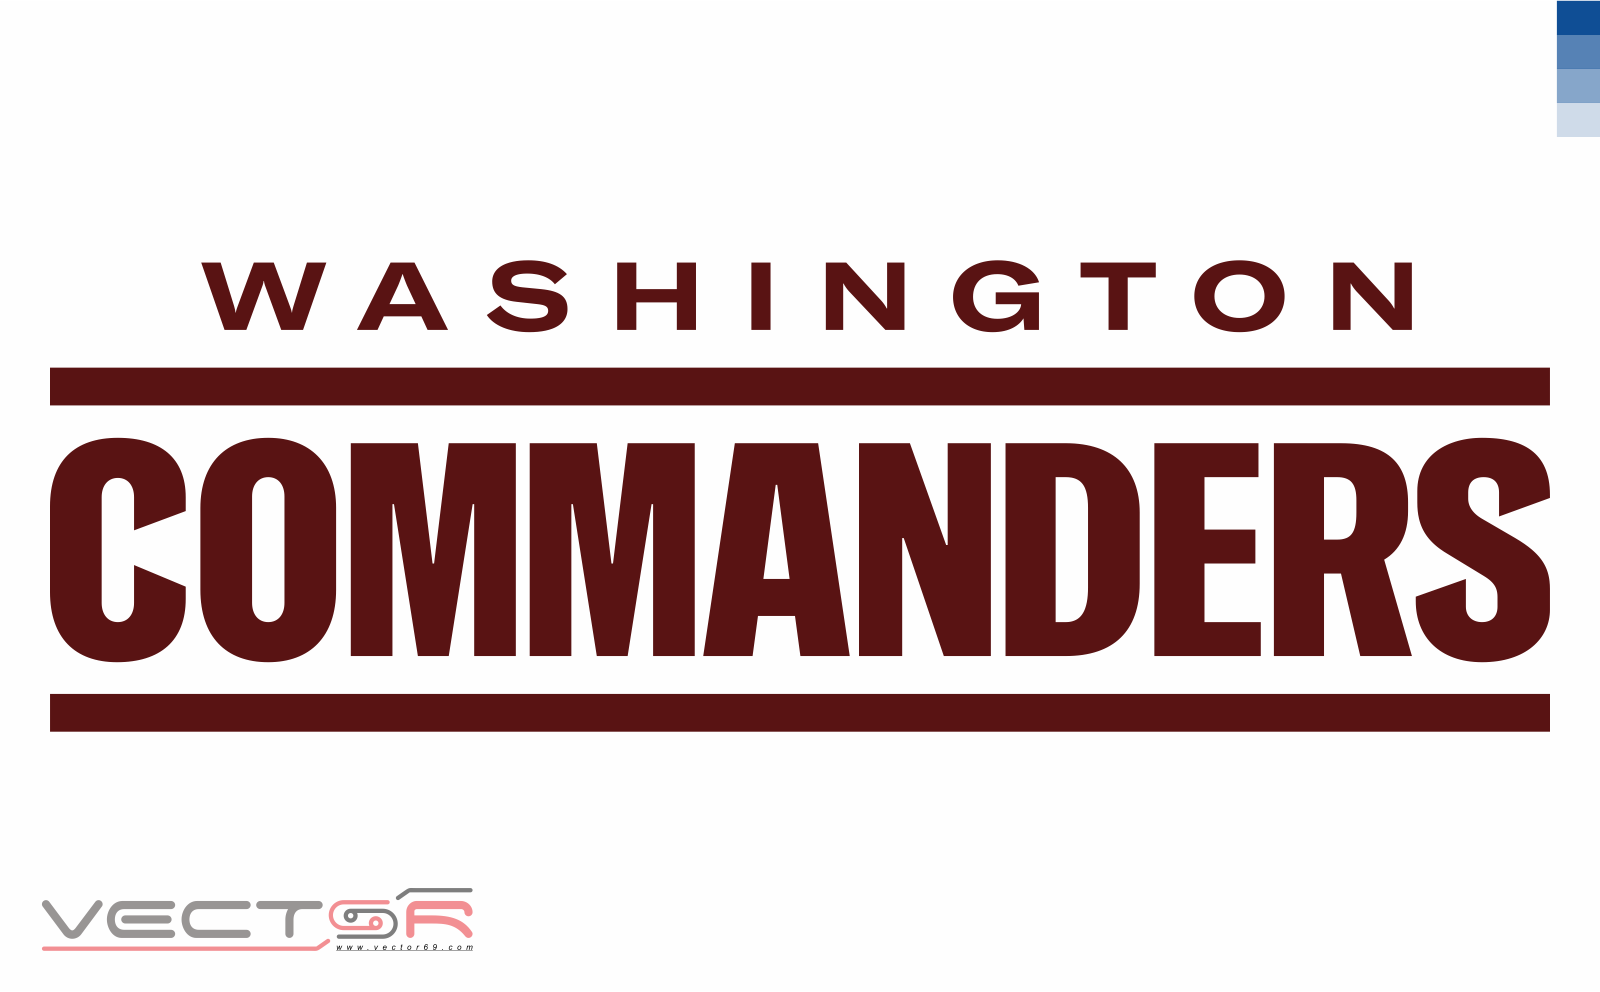 Washington Commanders Wordmark - Download Vector File Encapsulated PostScript (.EPS)